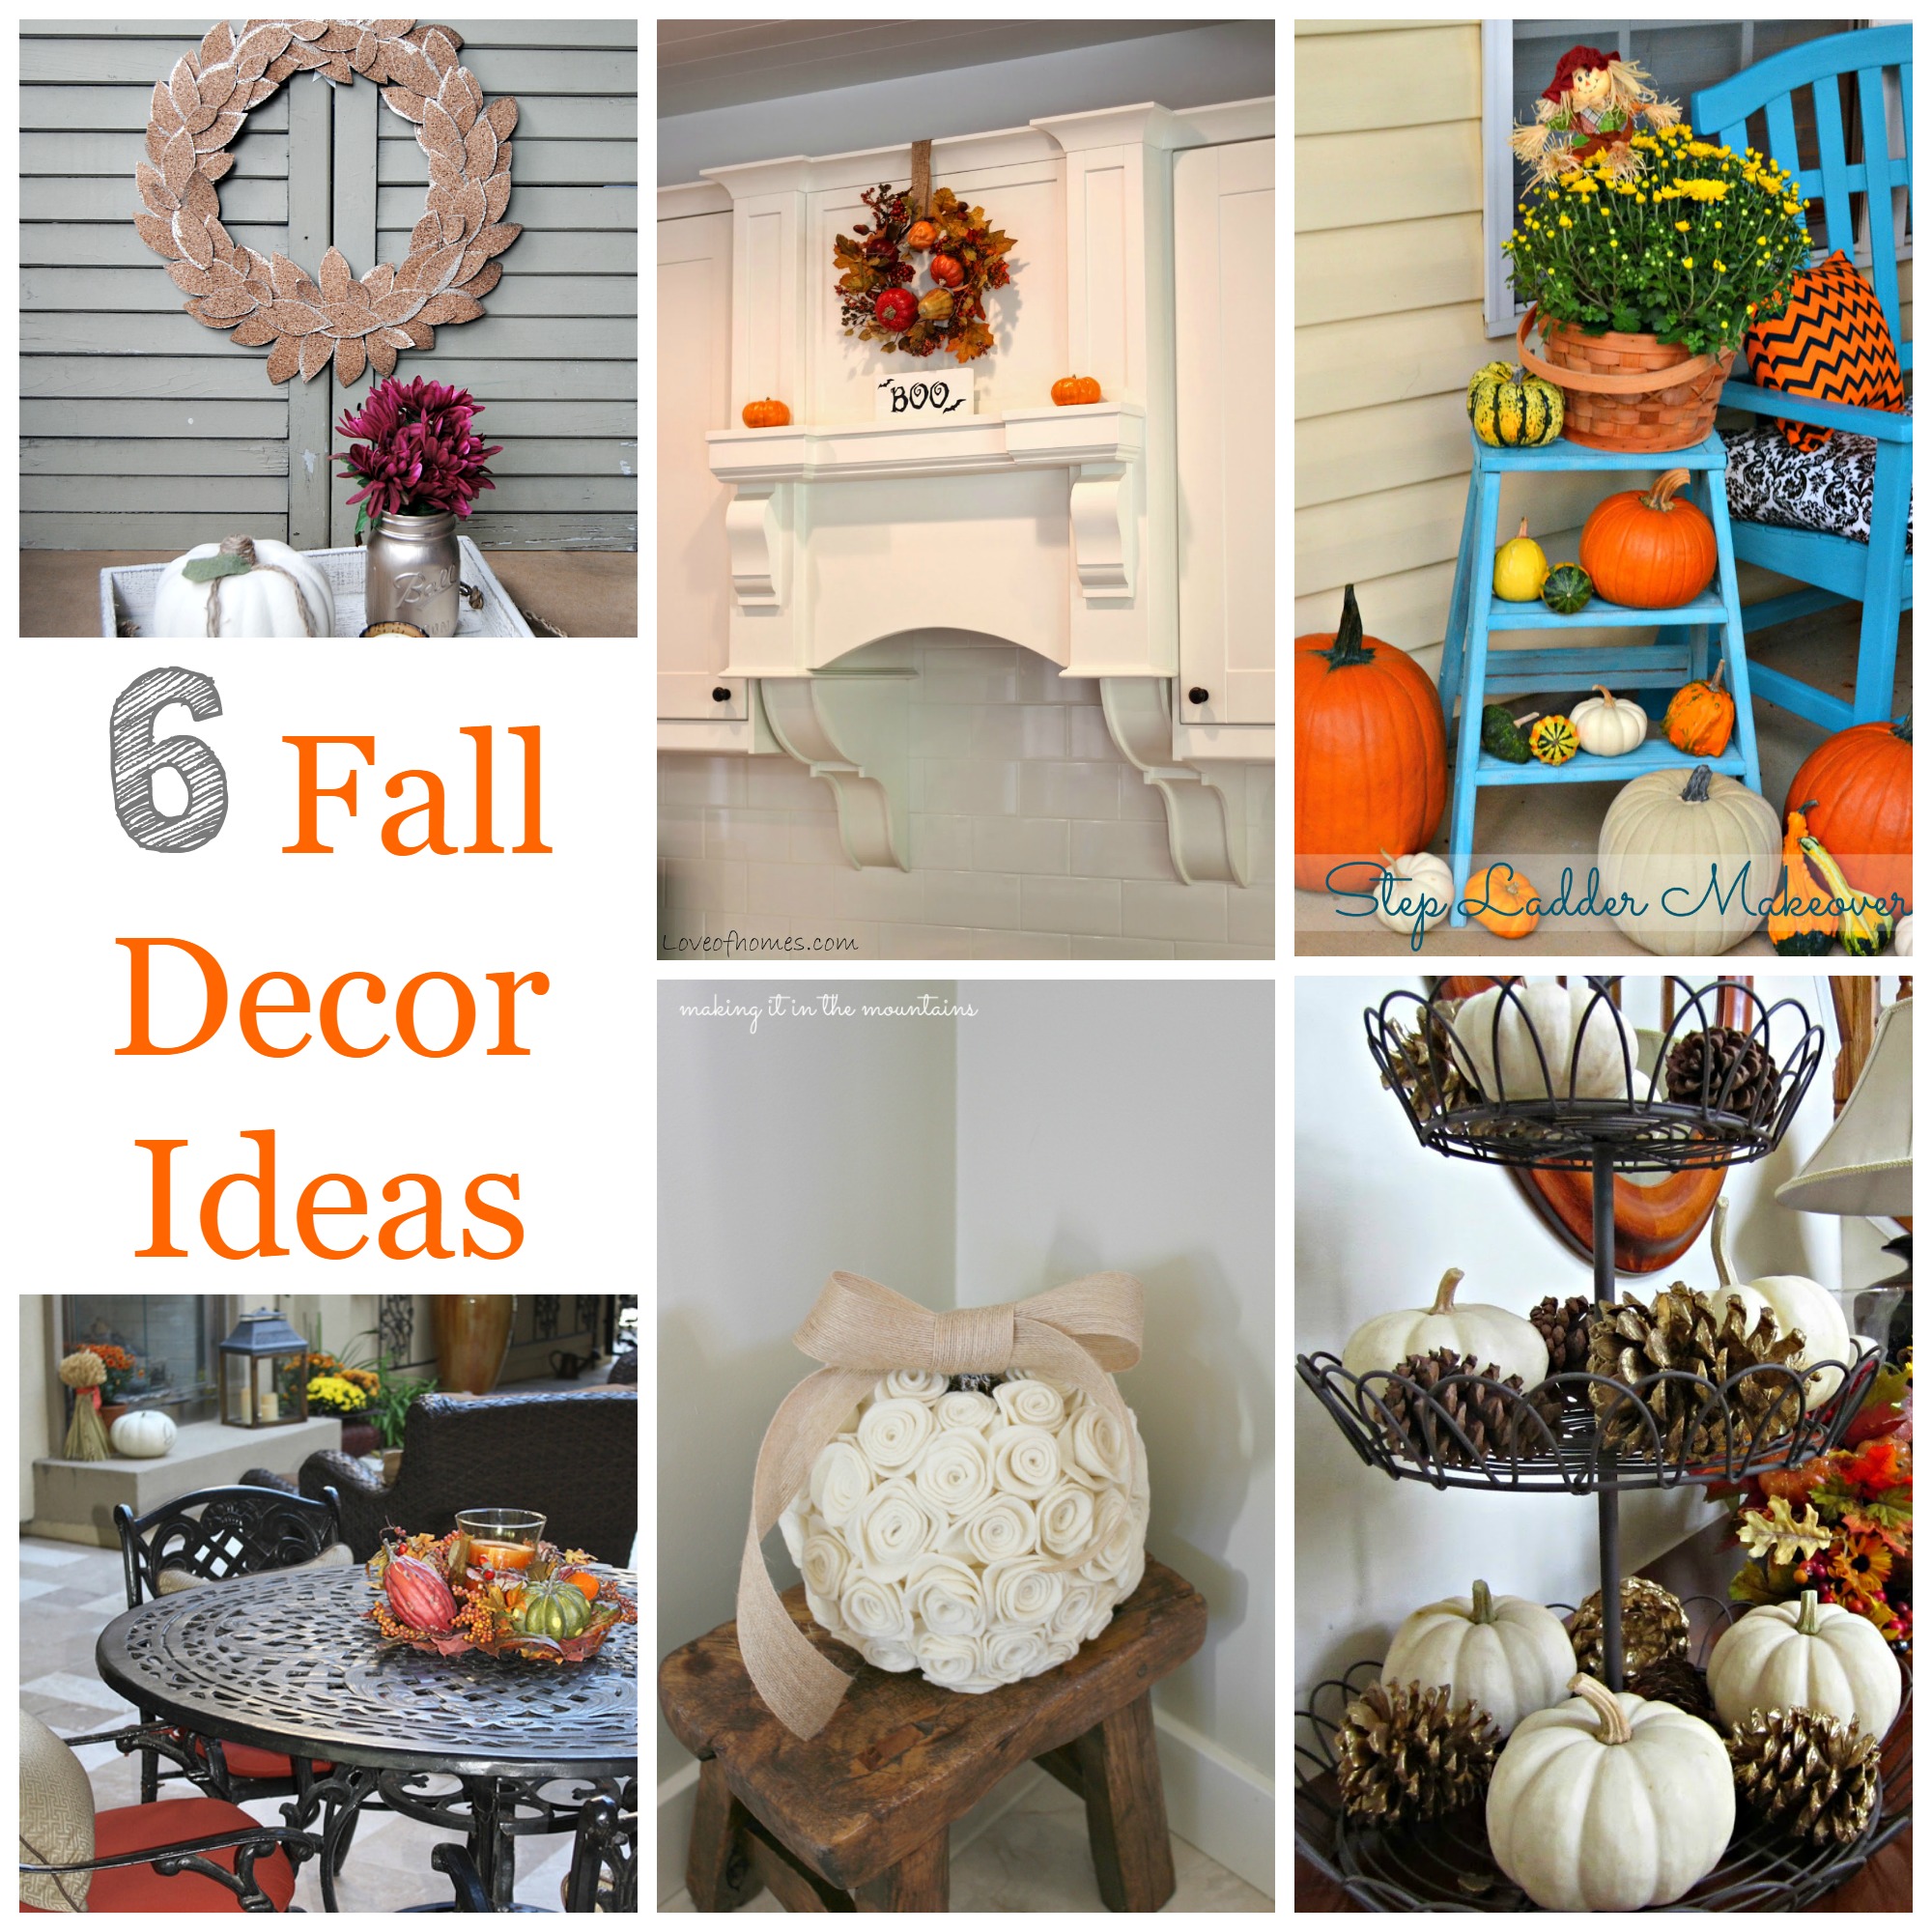 6 Fall Decor Ideas